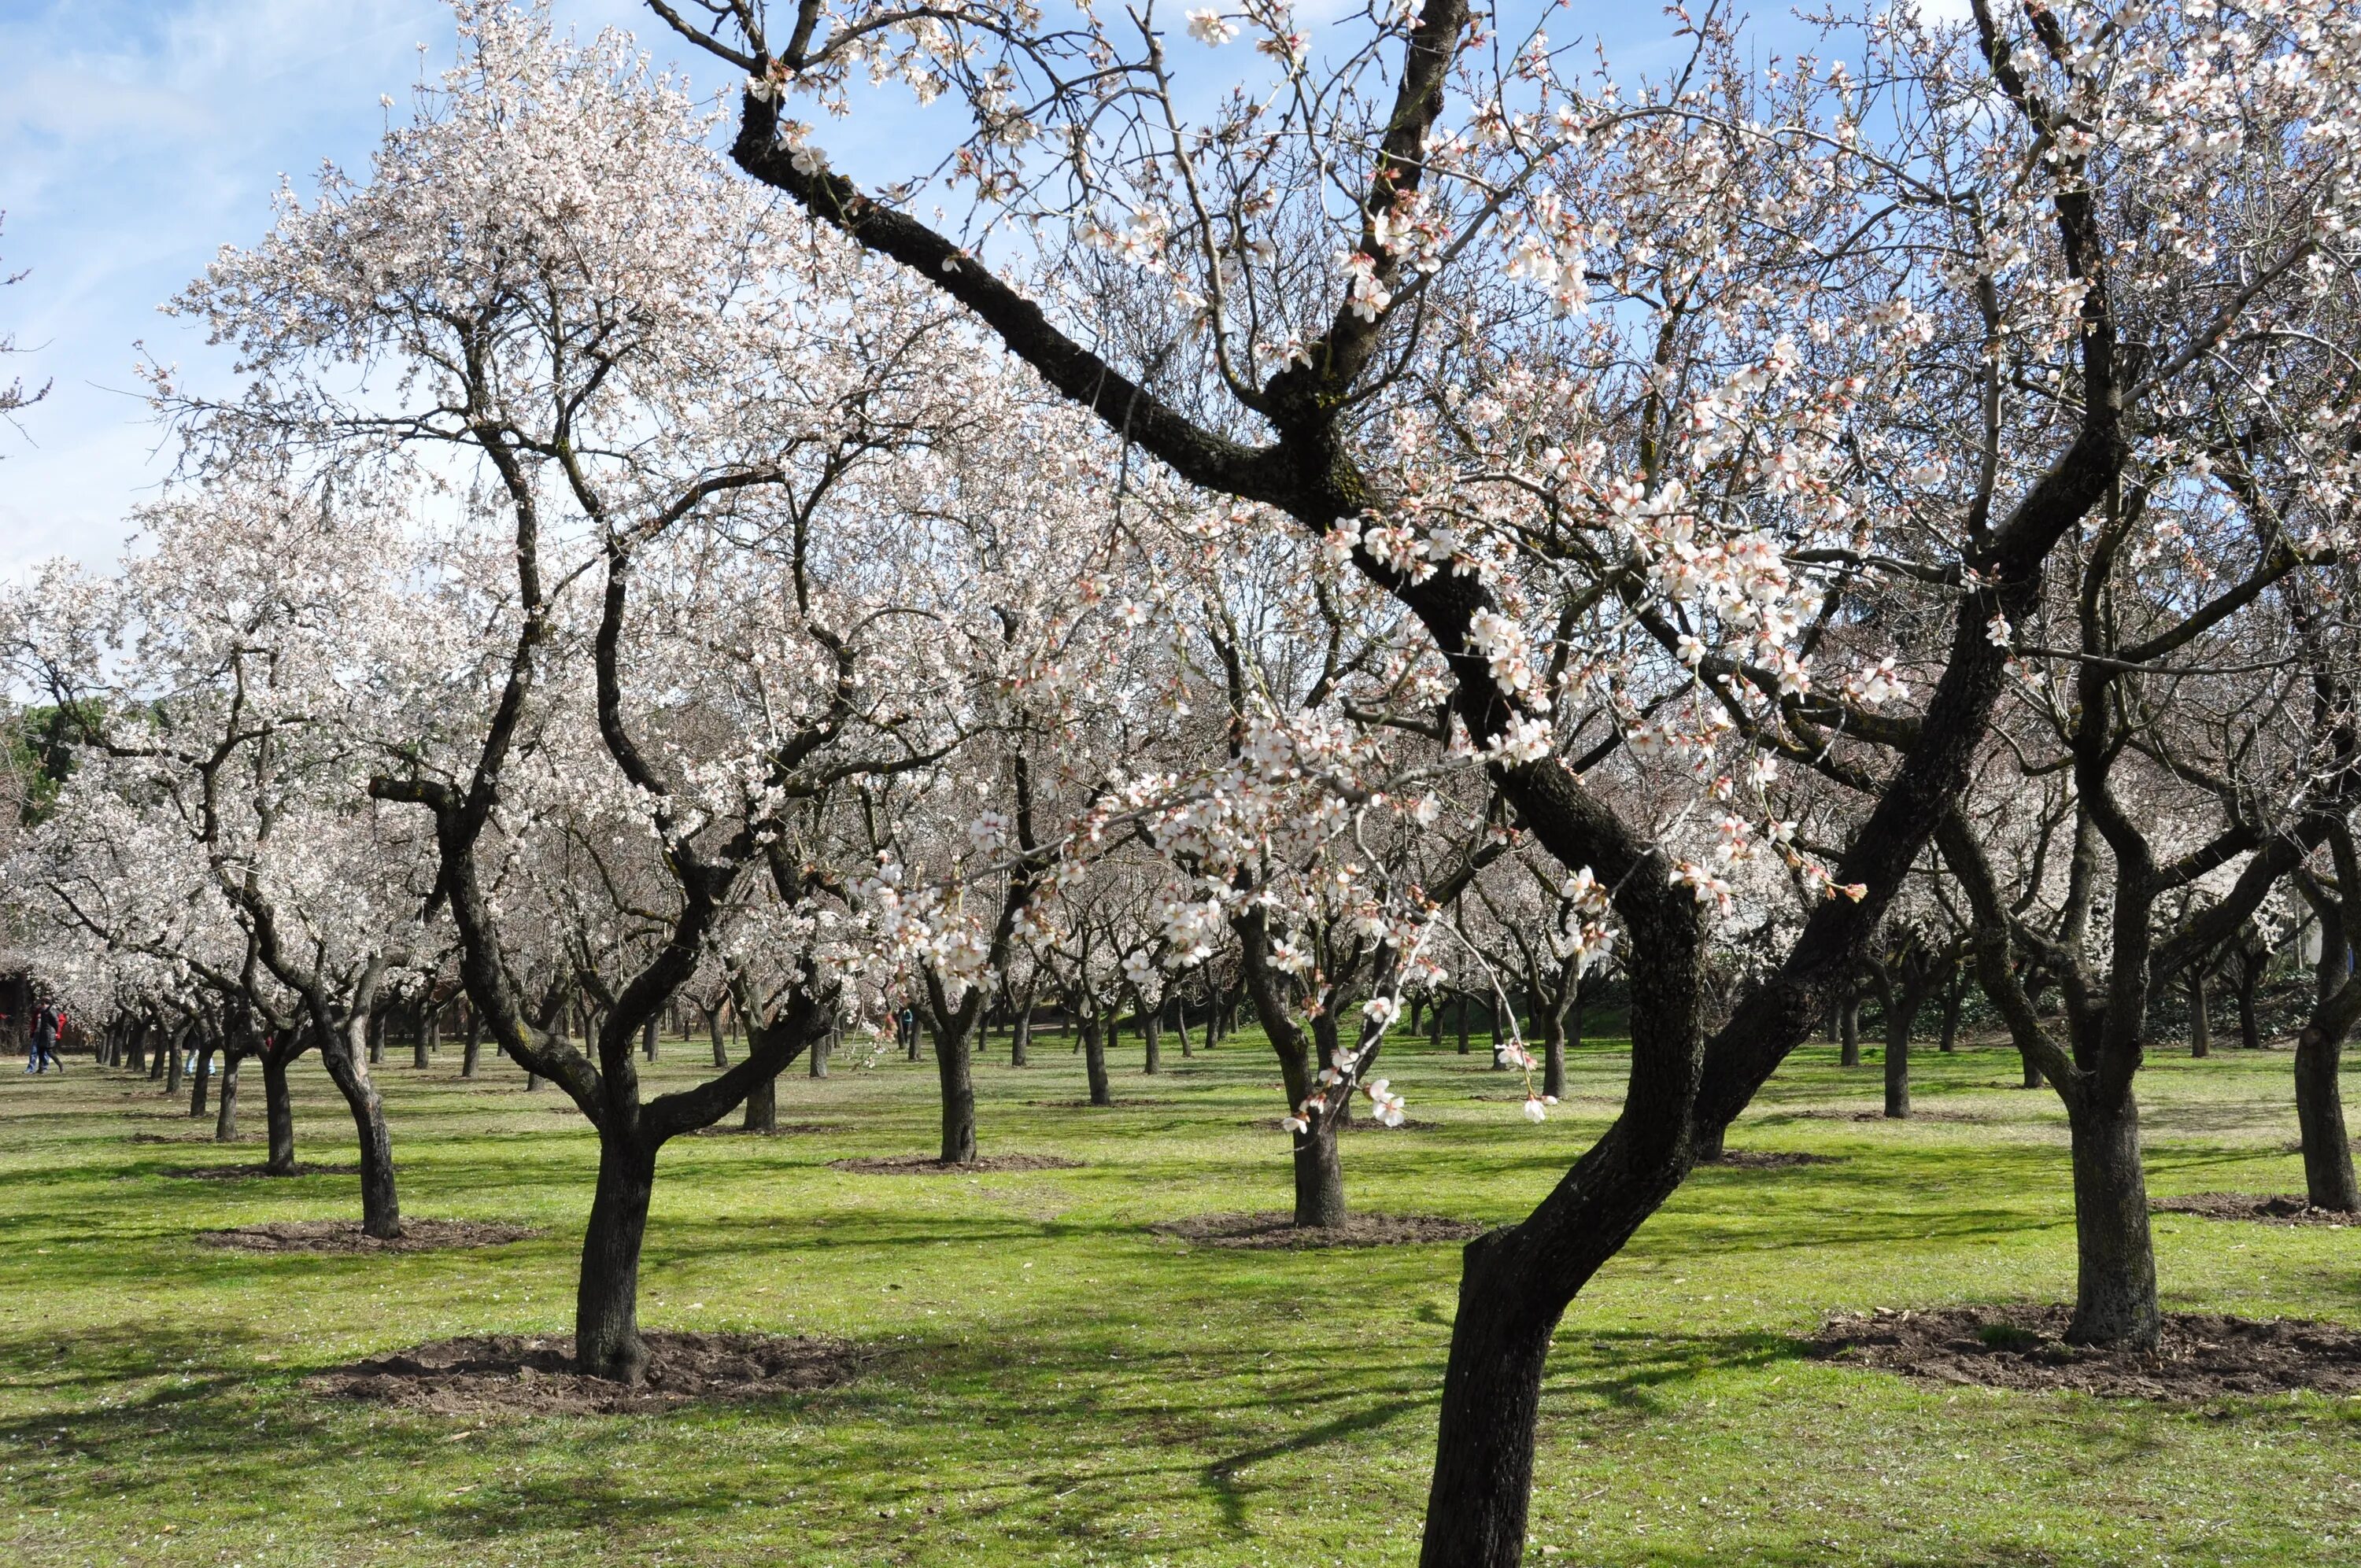 Сад цветущей вишни. Миндаль дерево Калифорния. Джалал Абад цветение миндаля. Весеннее дерево. Деревья весной.